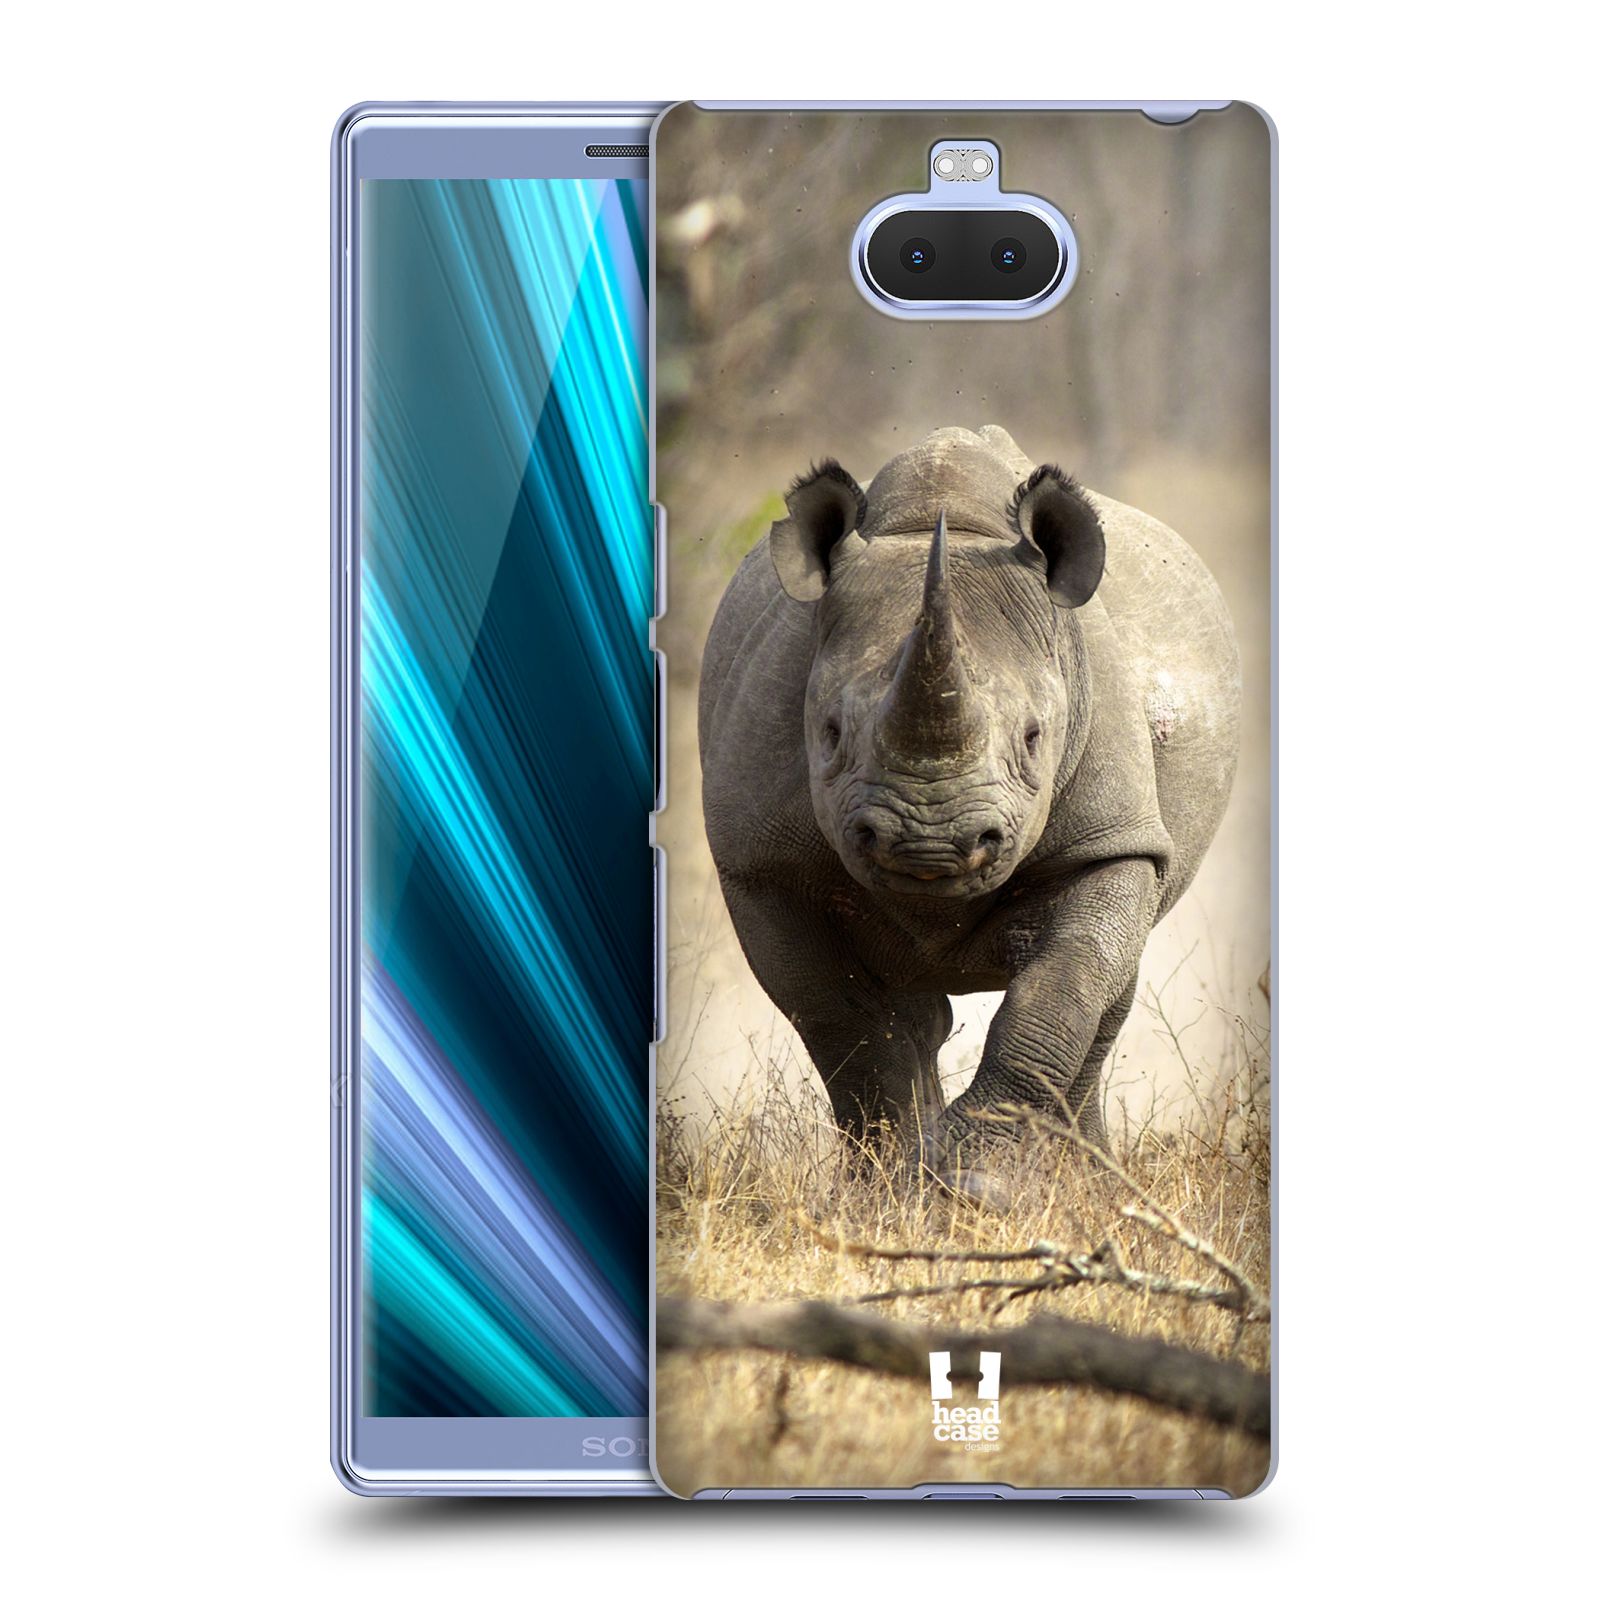 Pouzdro na mobil Sony Xperia 10 - Head Case - vzor Divočina, Divoký život a zvířata foto AFRIKA BĚŽÍCÍ NOSOROŽEC